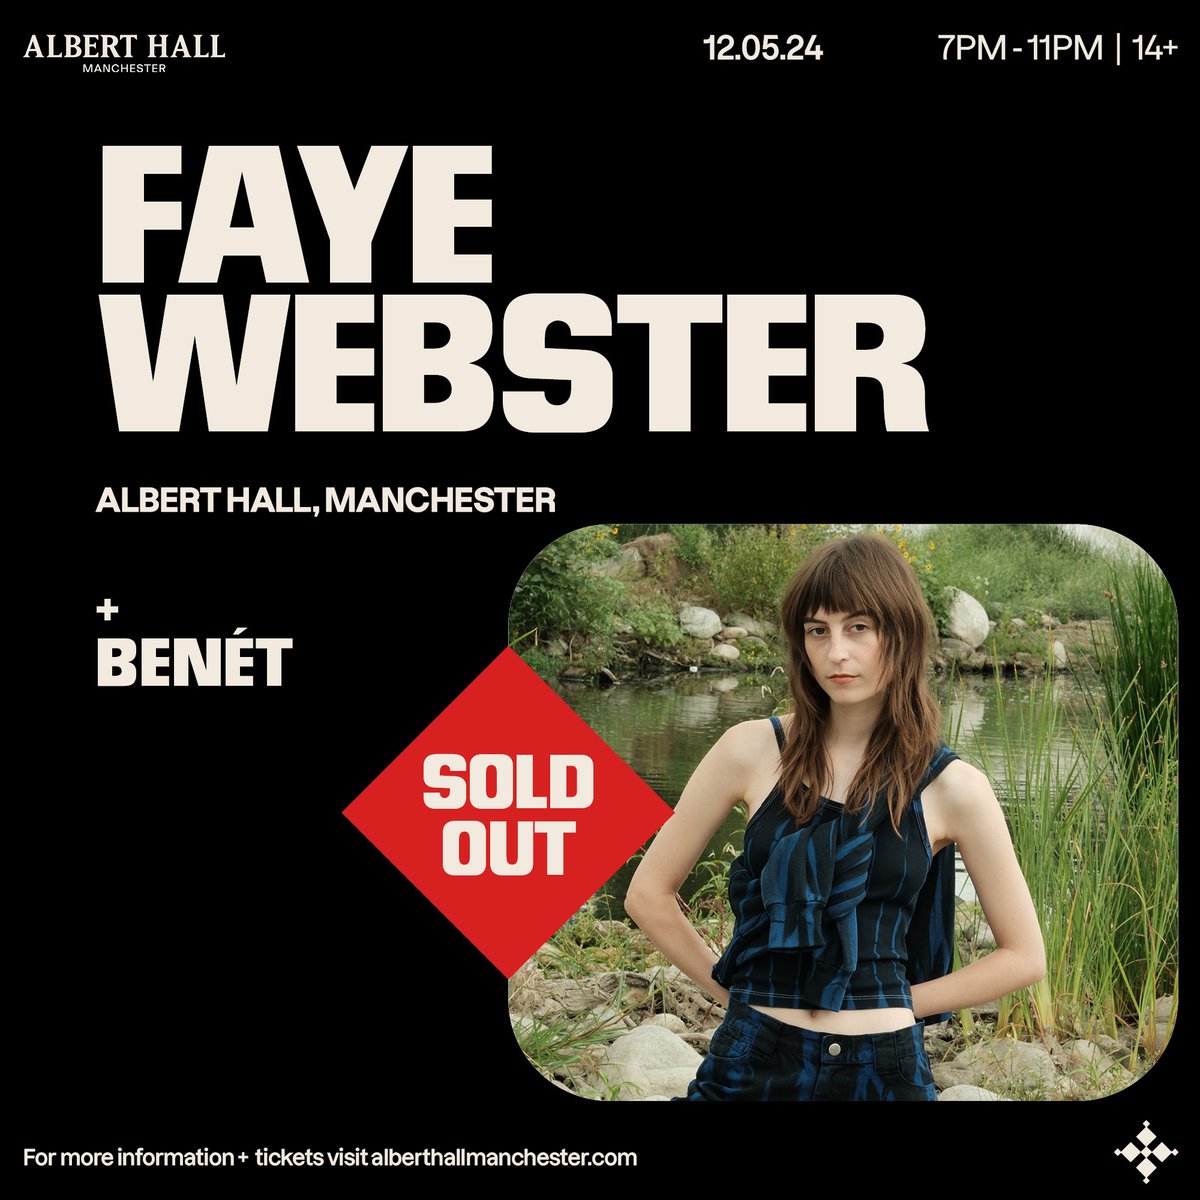 TONIGHT: Doors 7pm @Benantics 8pm #FayeWebster 9pm Curfew 11pm SOLD OUT Enjoy the show!